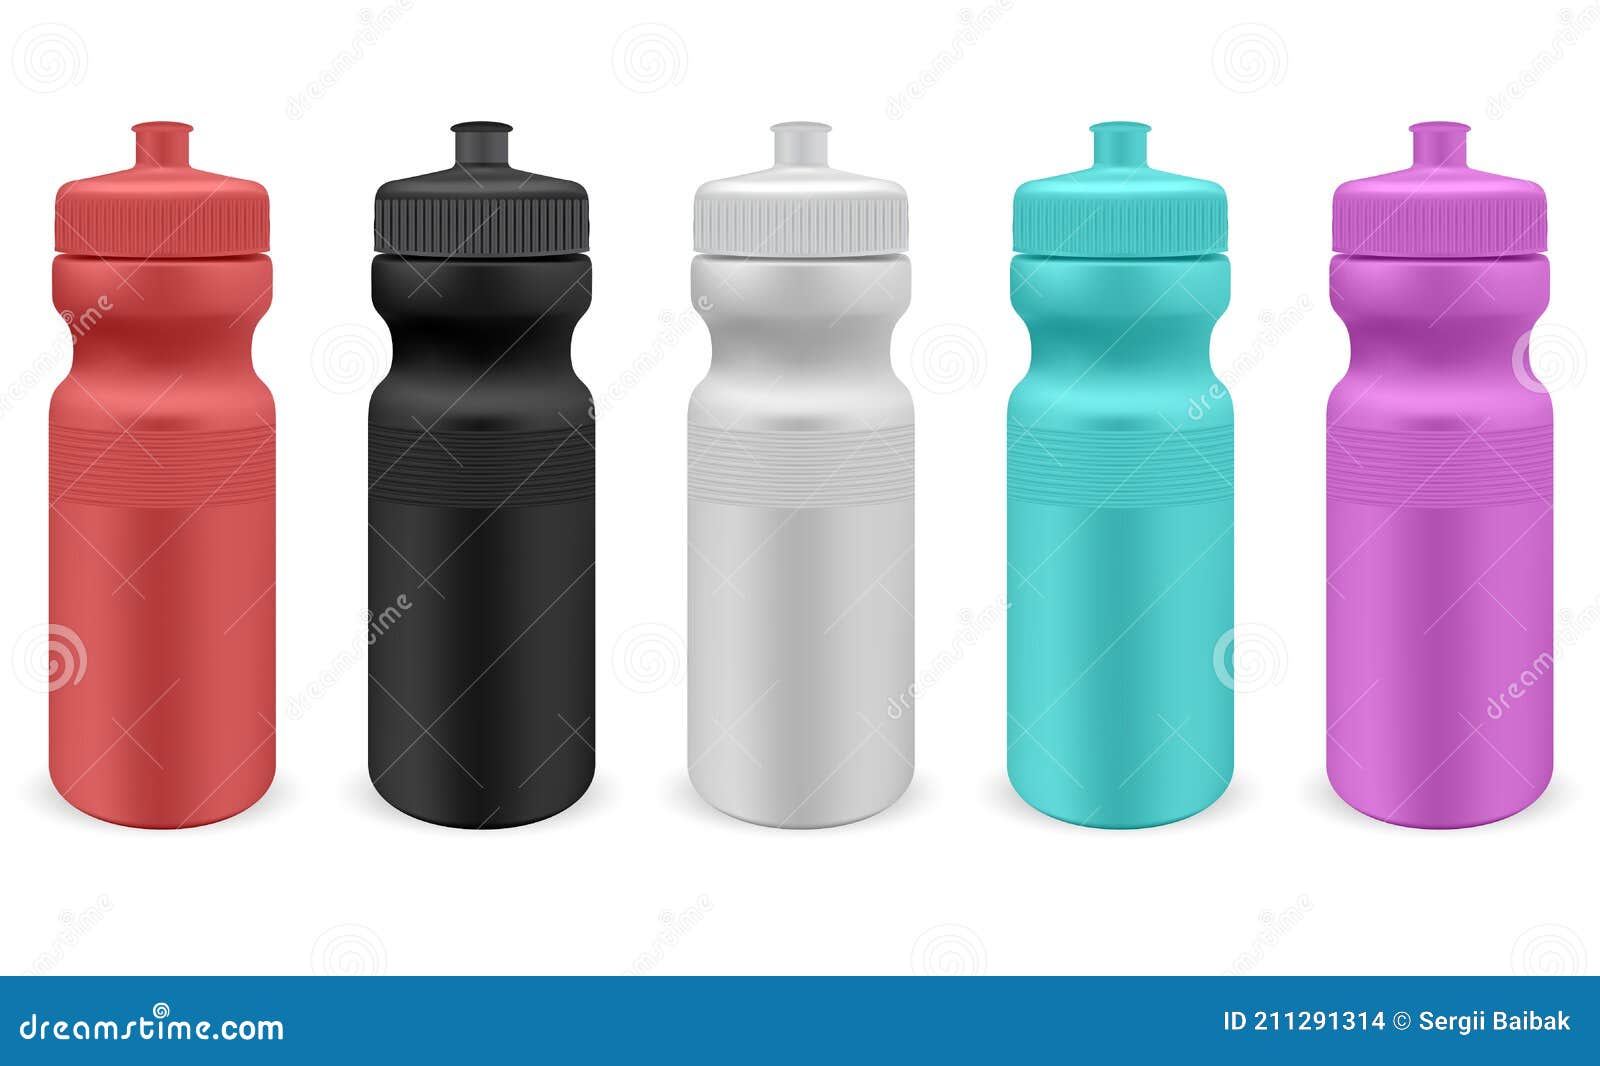 Botellas De Agua Aisladas  Botellas De Agua Reutilizables